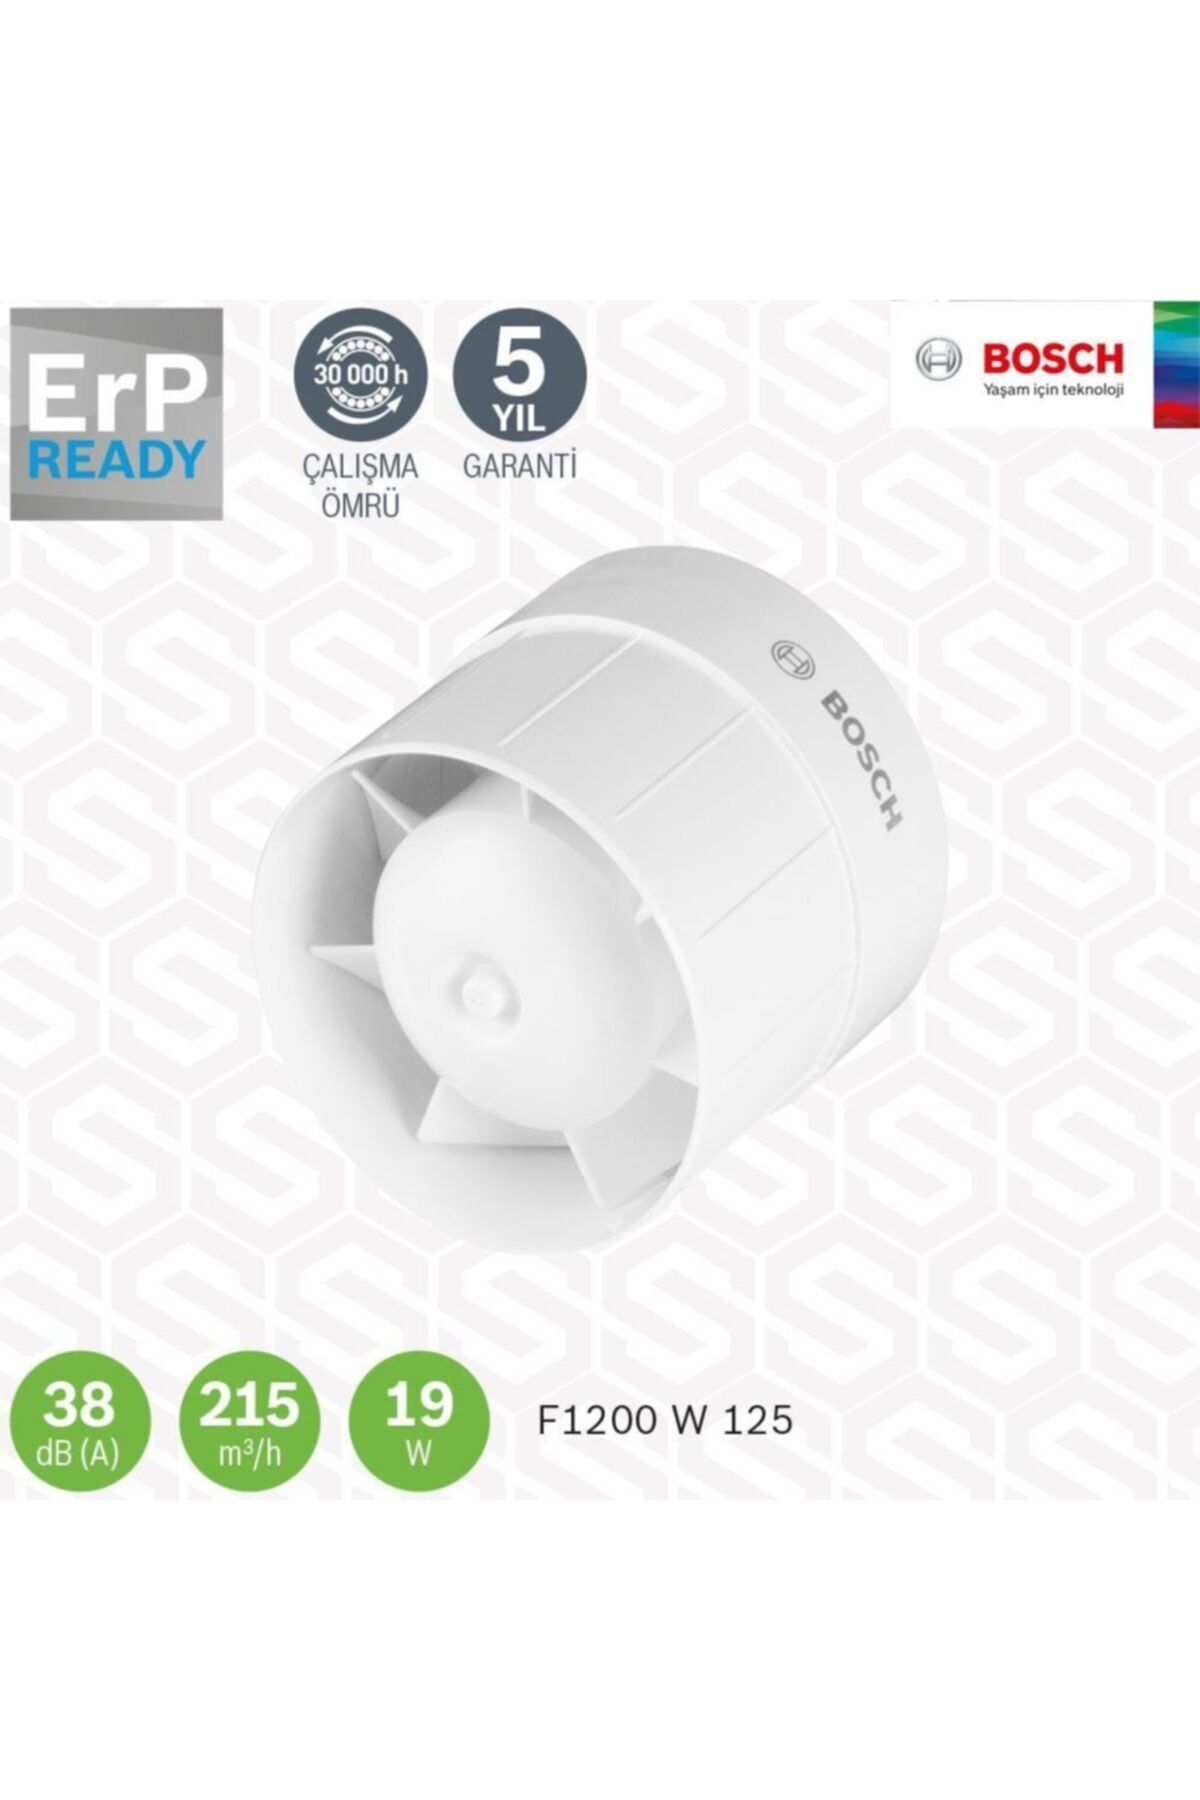 Bosch Kanal Tipi Fan (38db-a) - F1200 D 125 / 215 M3/h